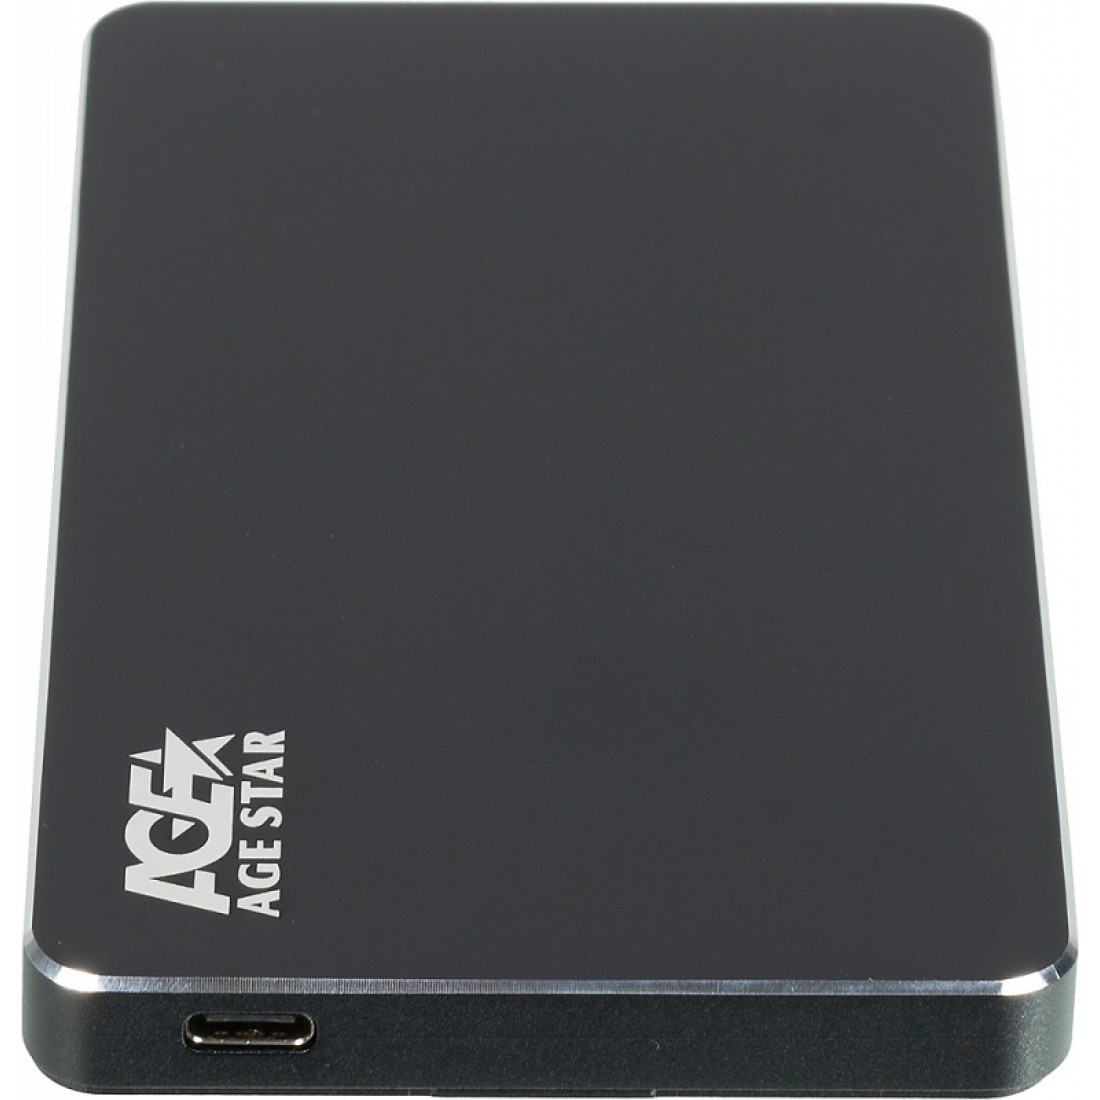 Внешний корпус для HDD/SSD AgeStar 3UB2AX2 SATA I/II/III алюминий черный 2.5 внешний корпус для hdd ssd agestar 3ub2p4c